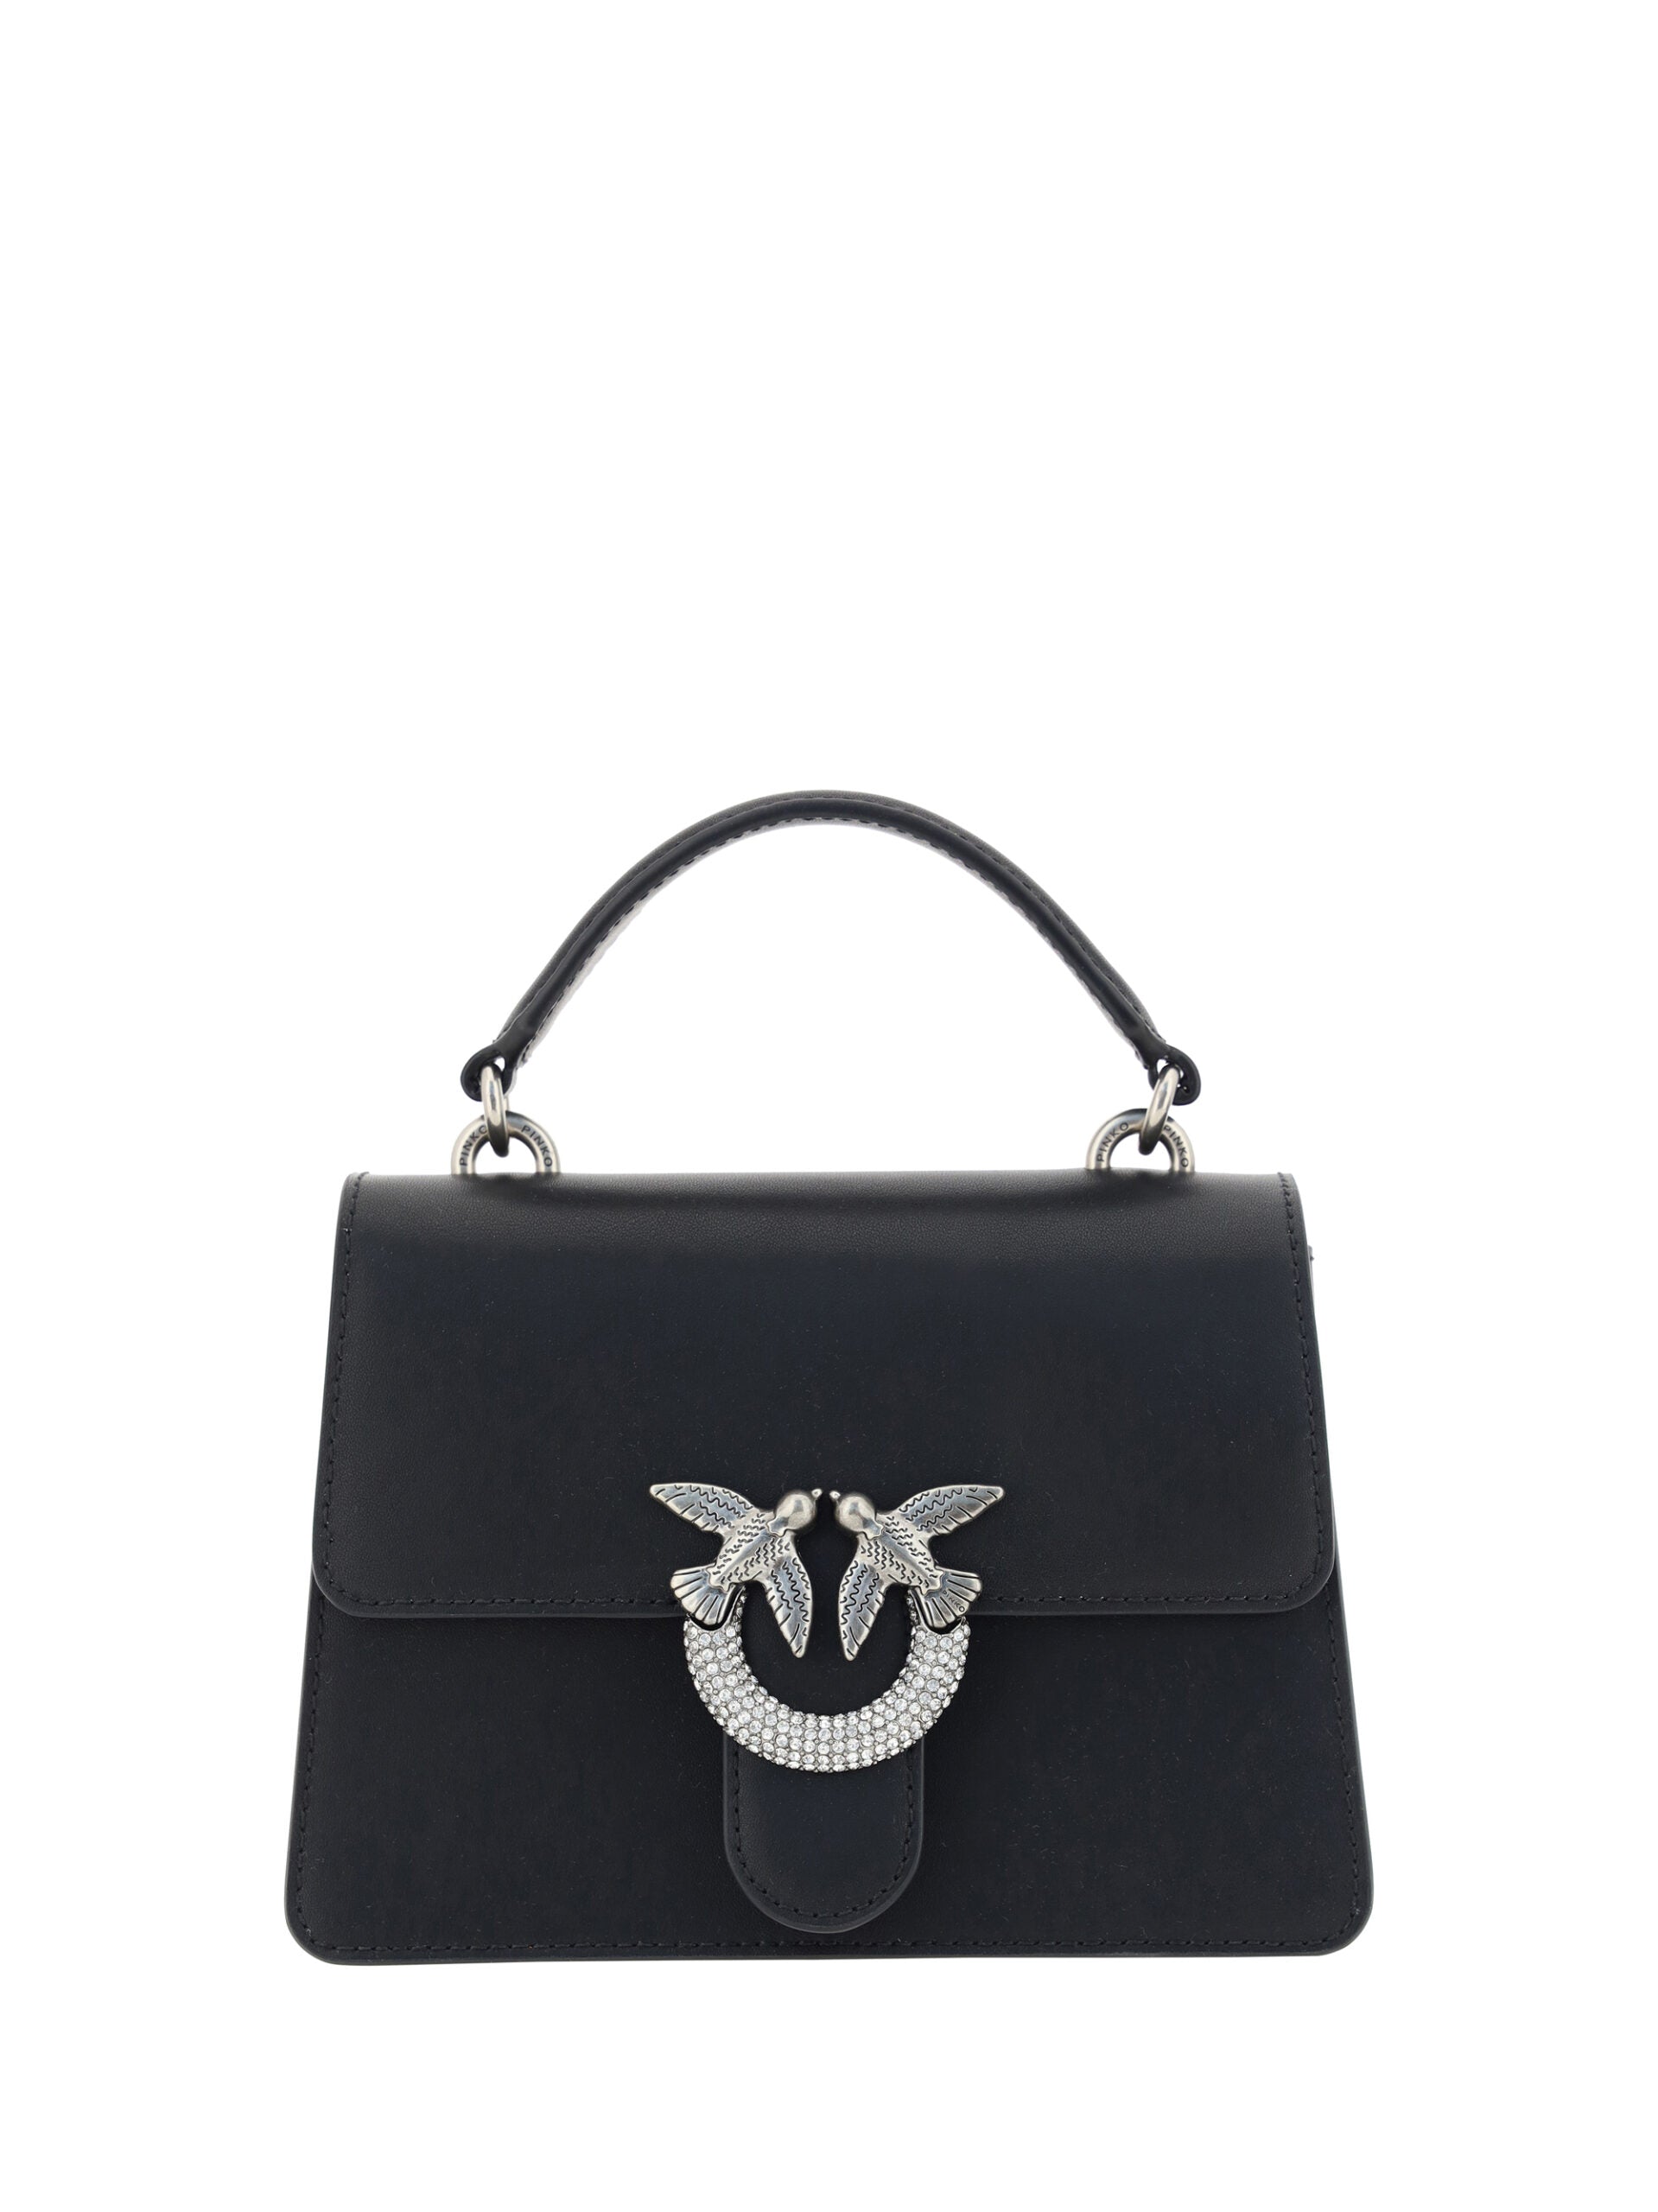 Black Calf Leather Love One Classic Handbag